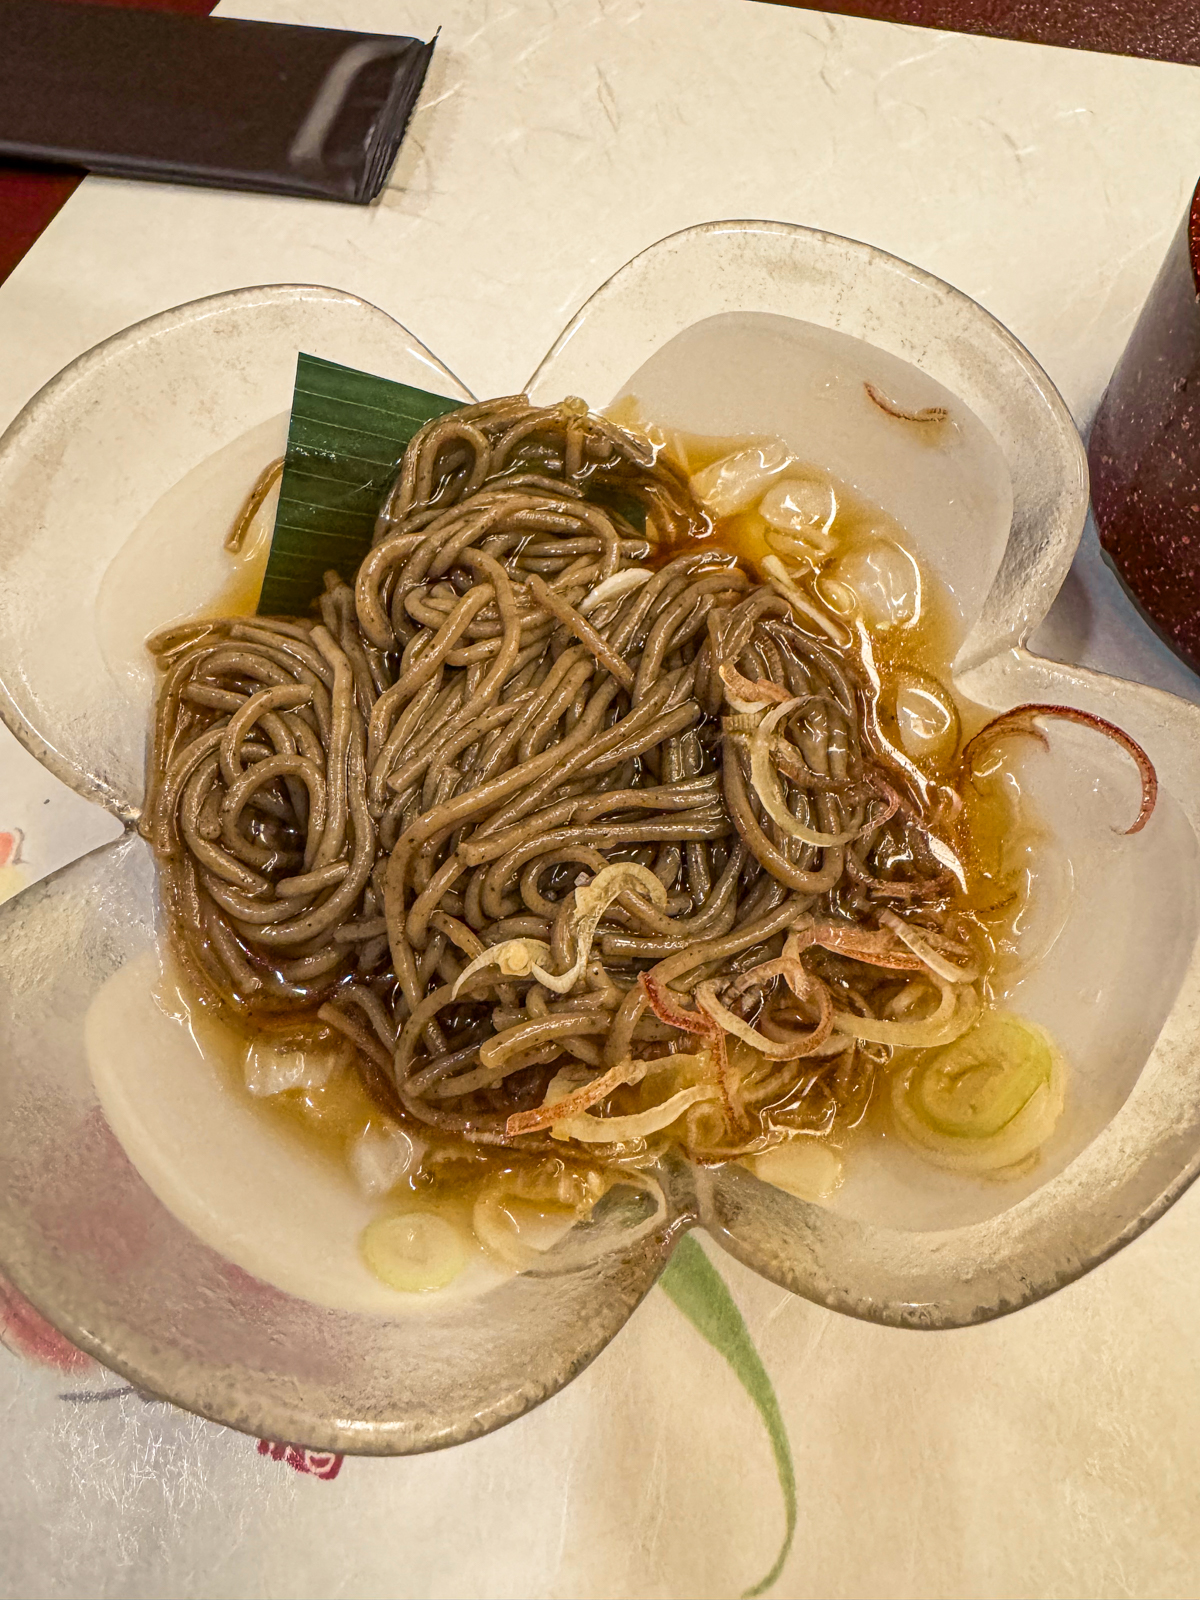 Dashi poured into bowl of cold soba noodles.